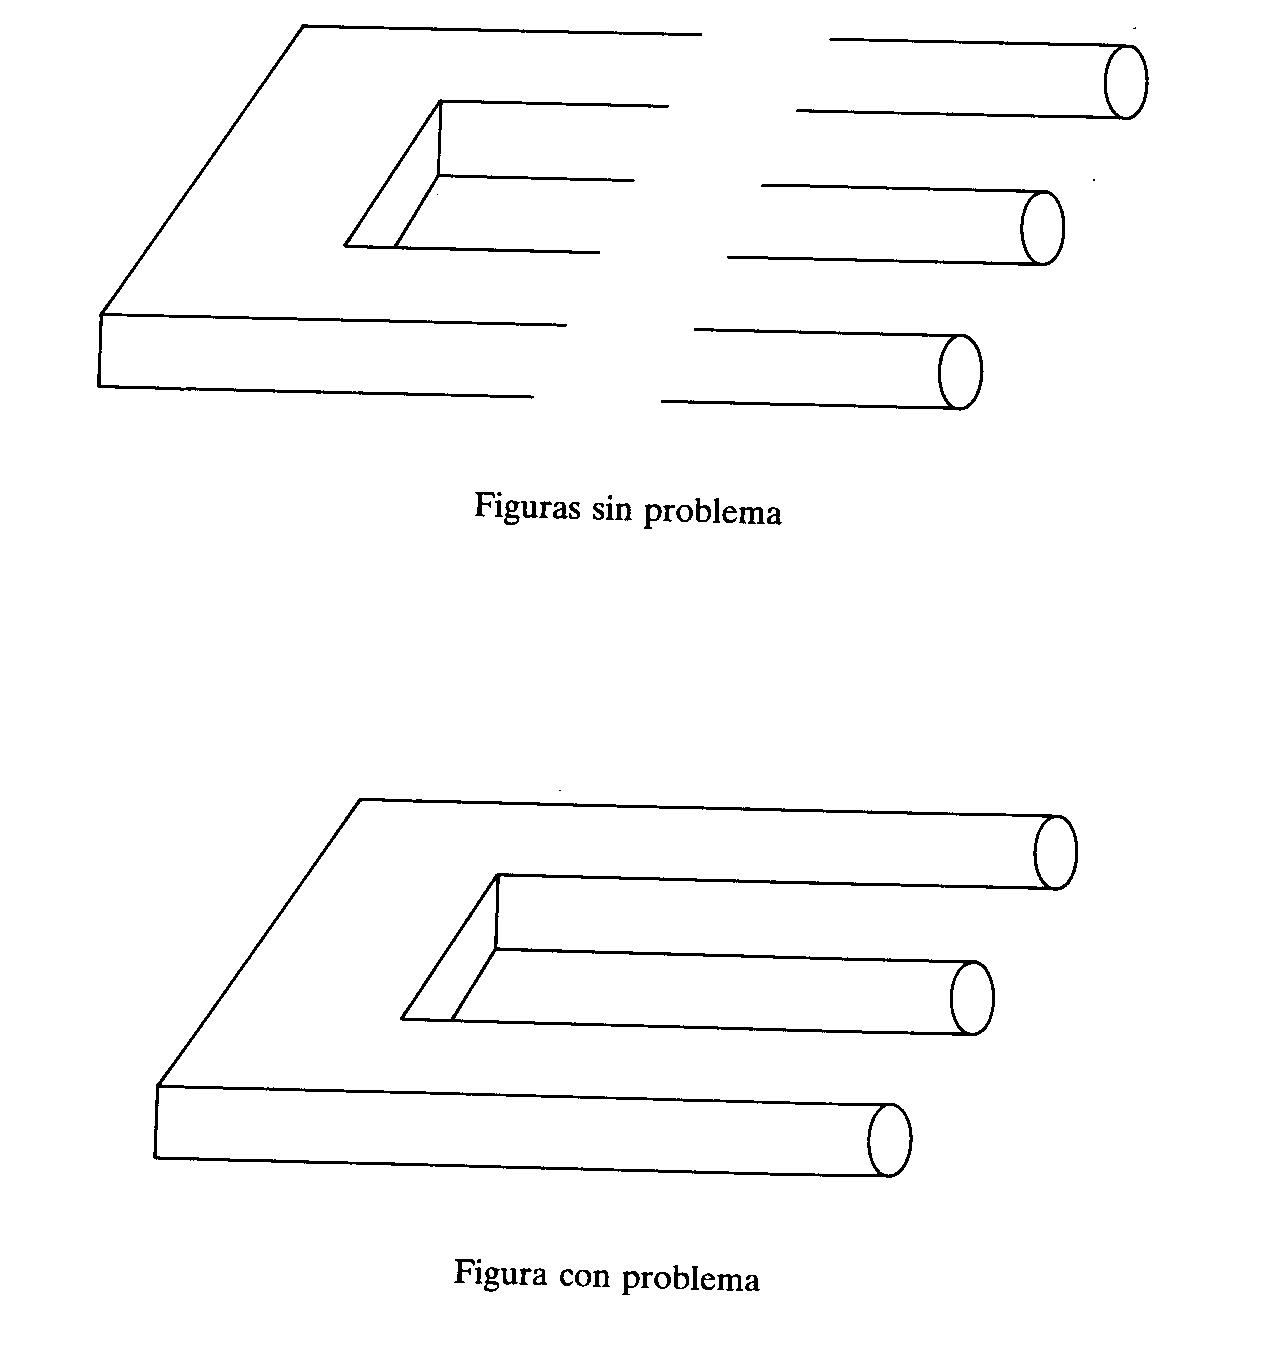 Graphics (p.3-2)